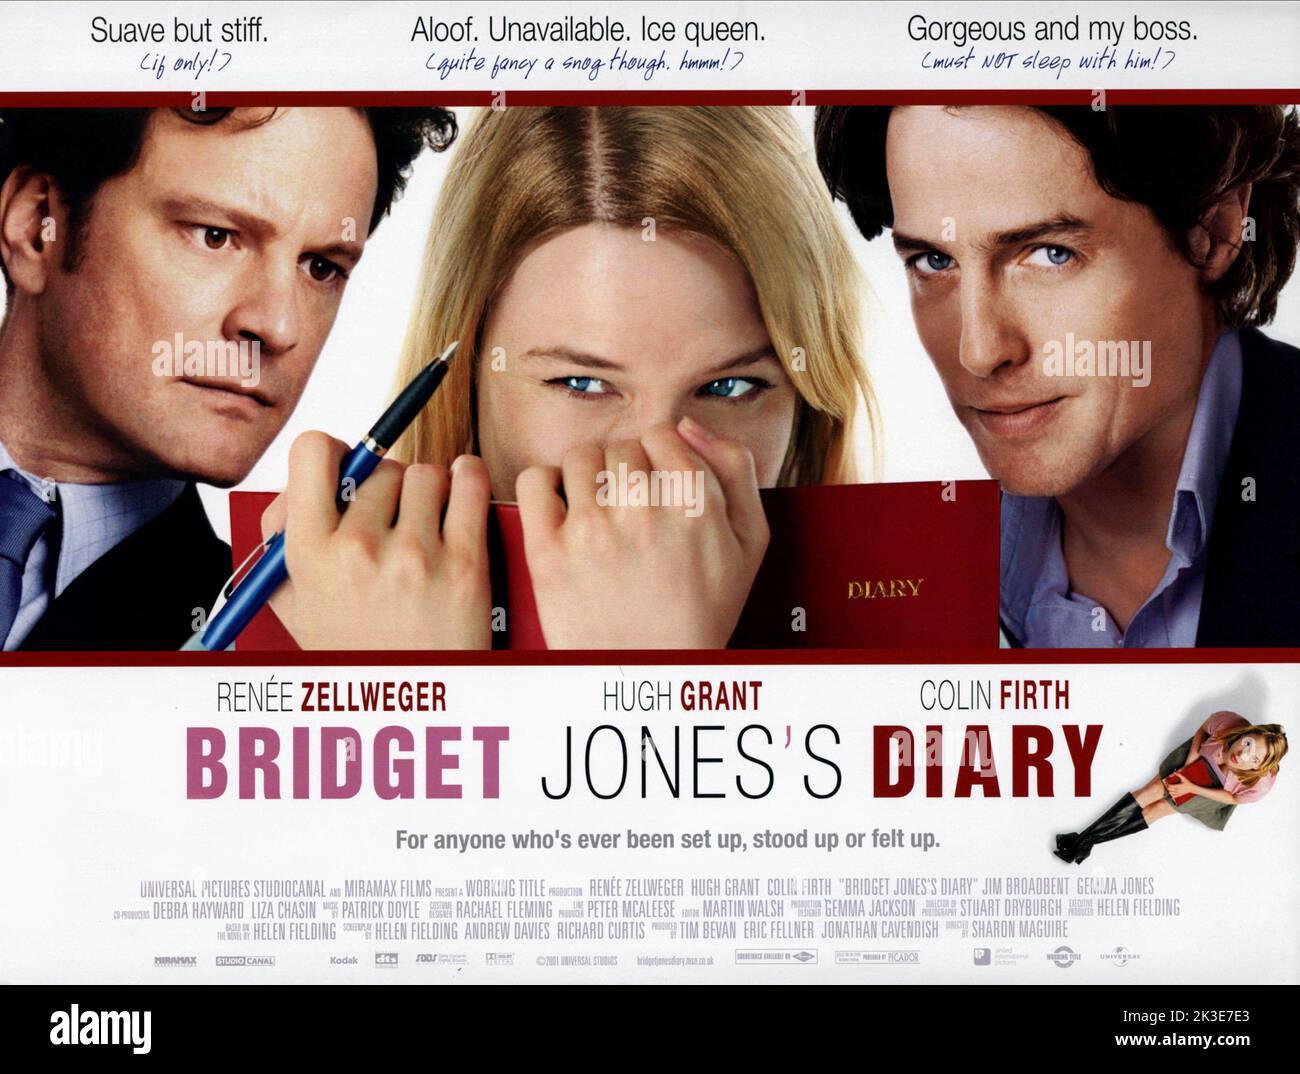 Agenda di Bridget Jones 2001. Poster del film del diario di Bridget Jones. Renee Zellweger Foto Stock